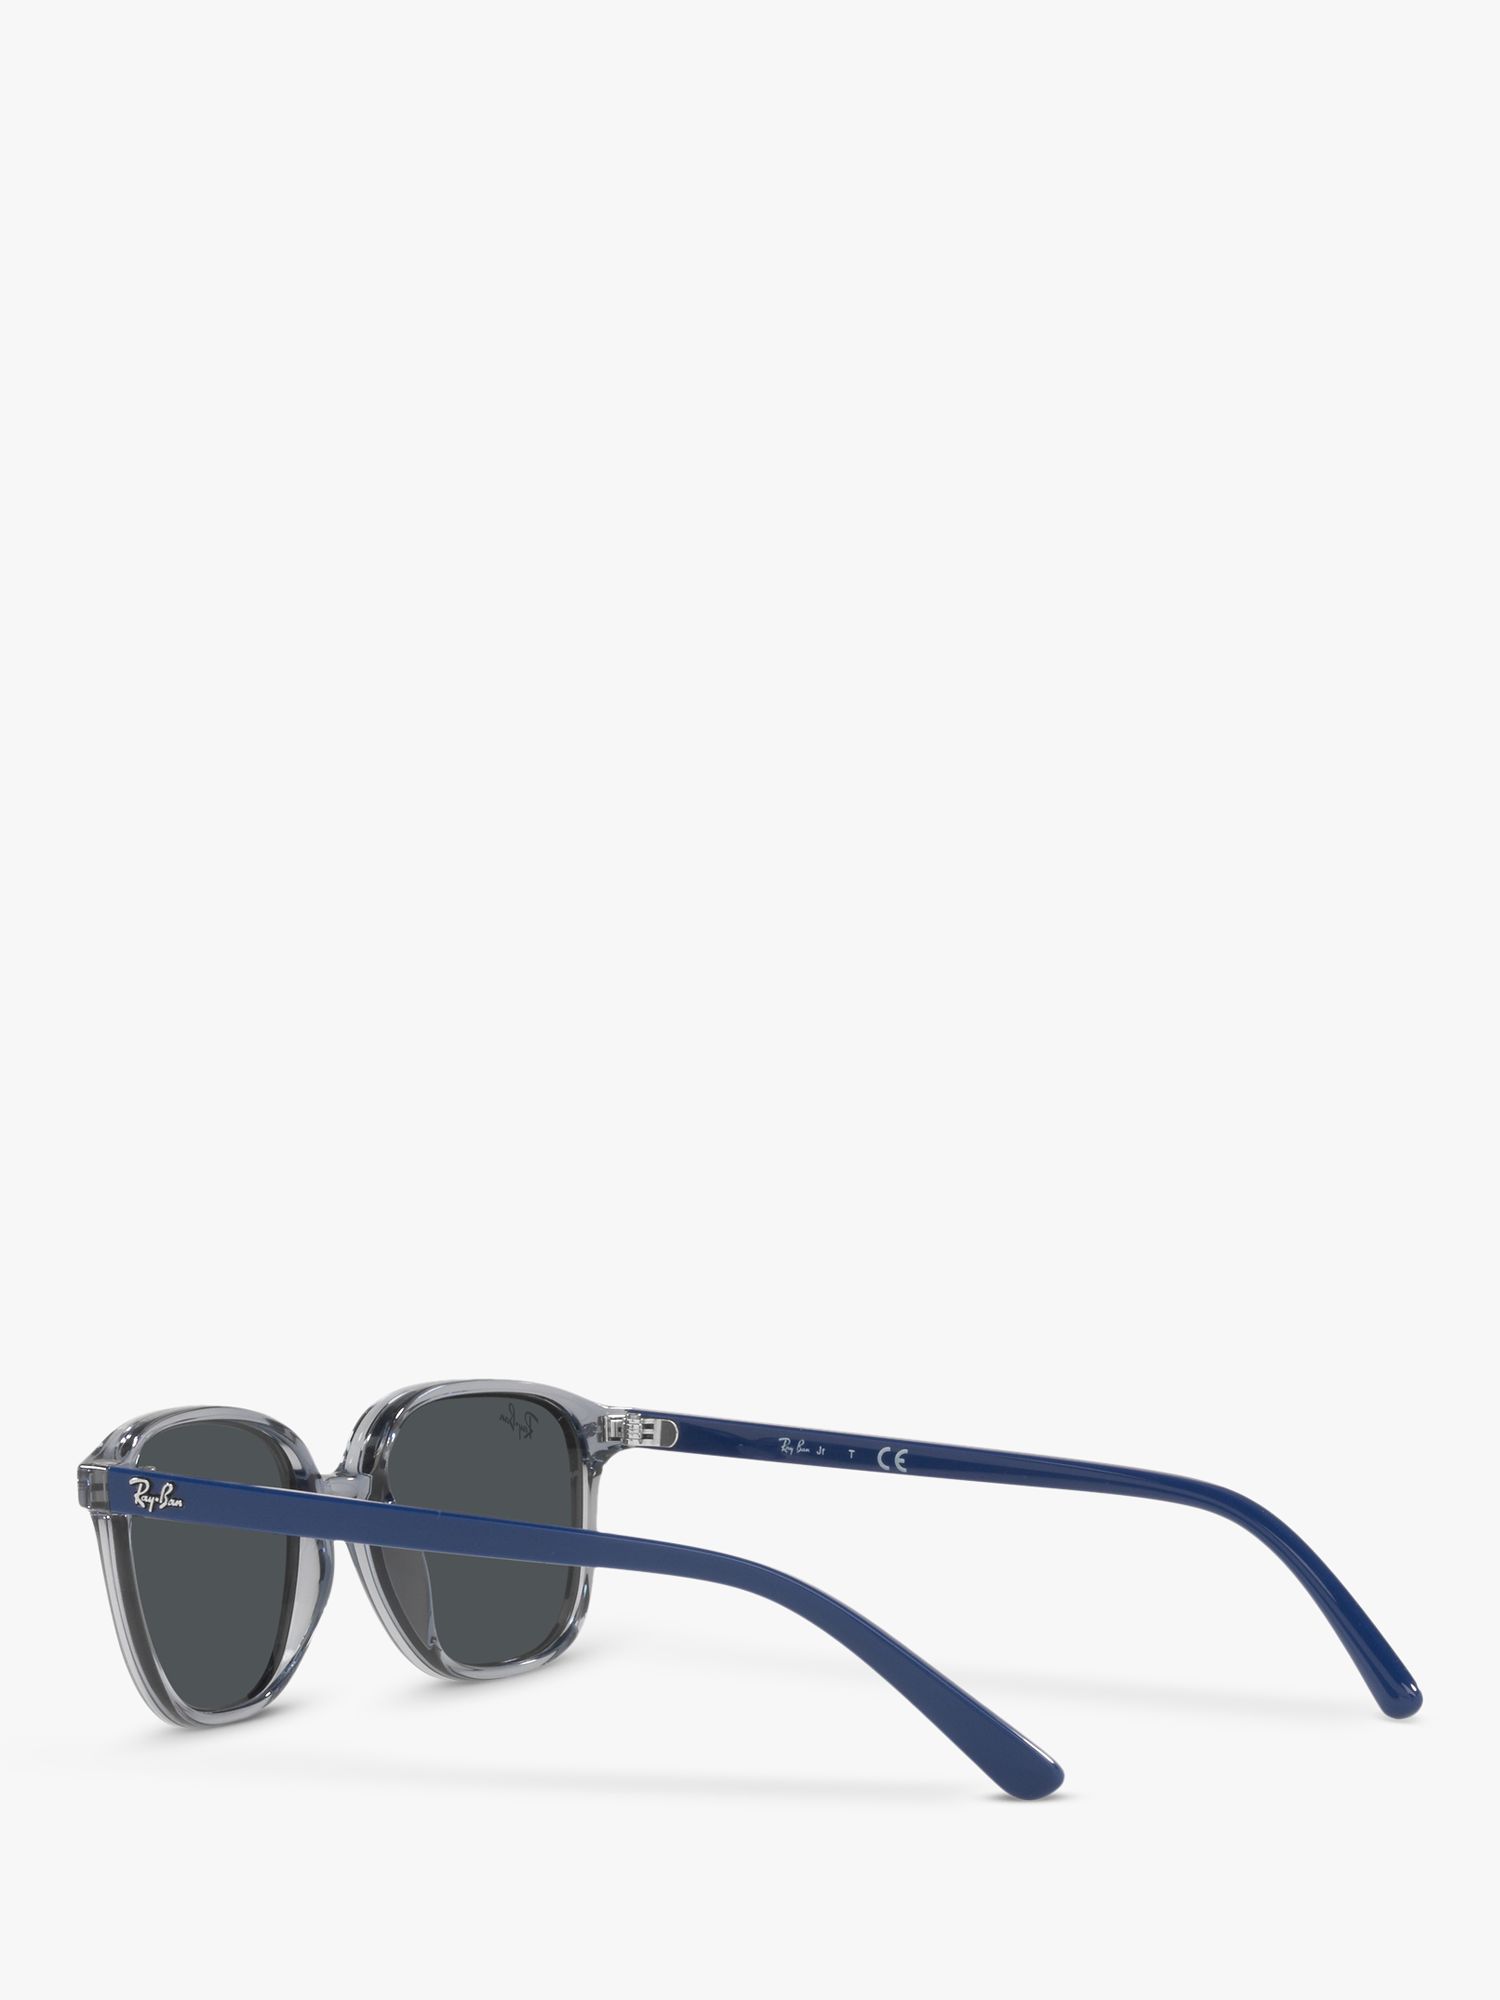 Ray-Ban RJ9093S Unisex Square Sunglasses, Transparent Blue/Grey